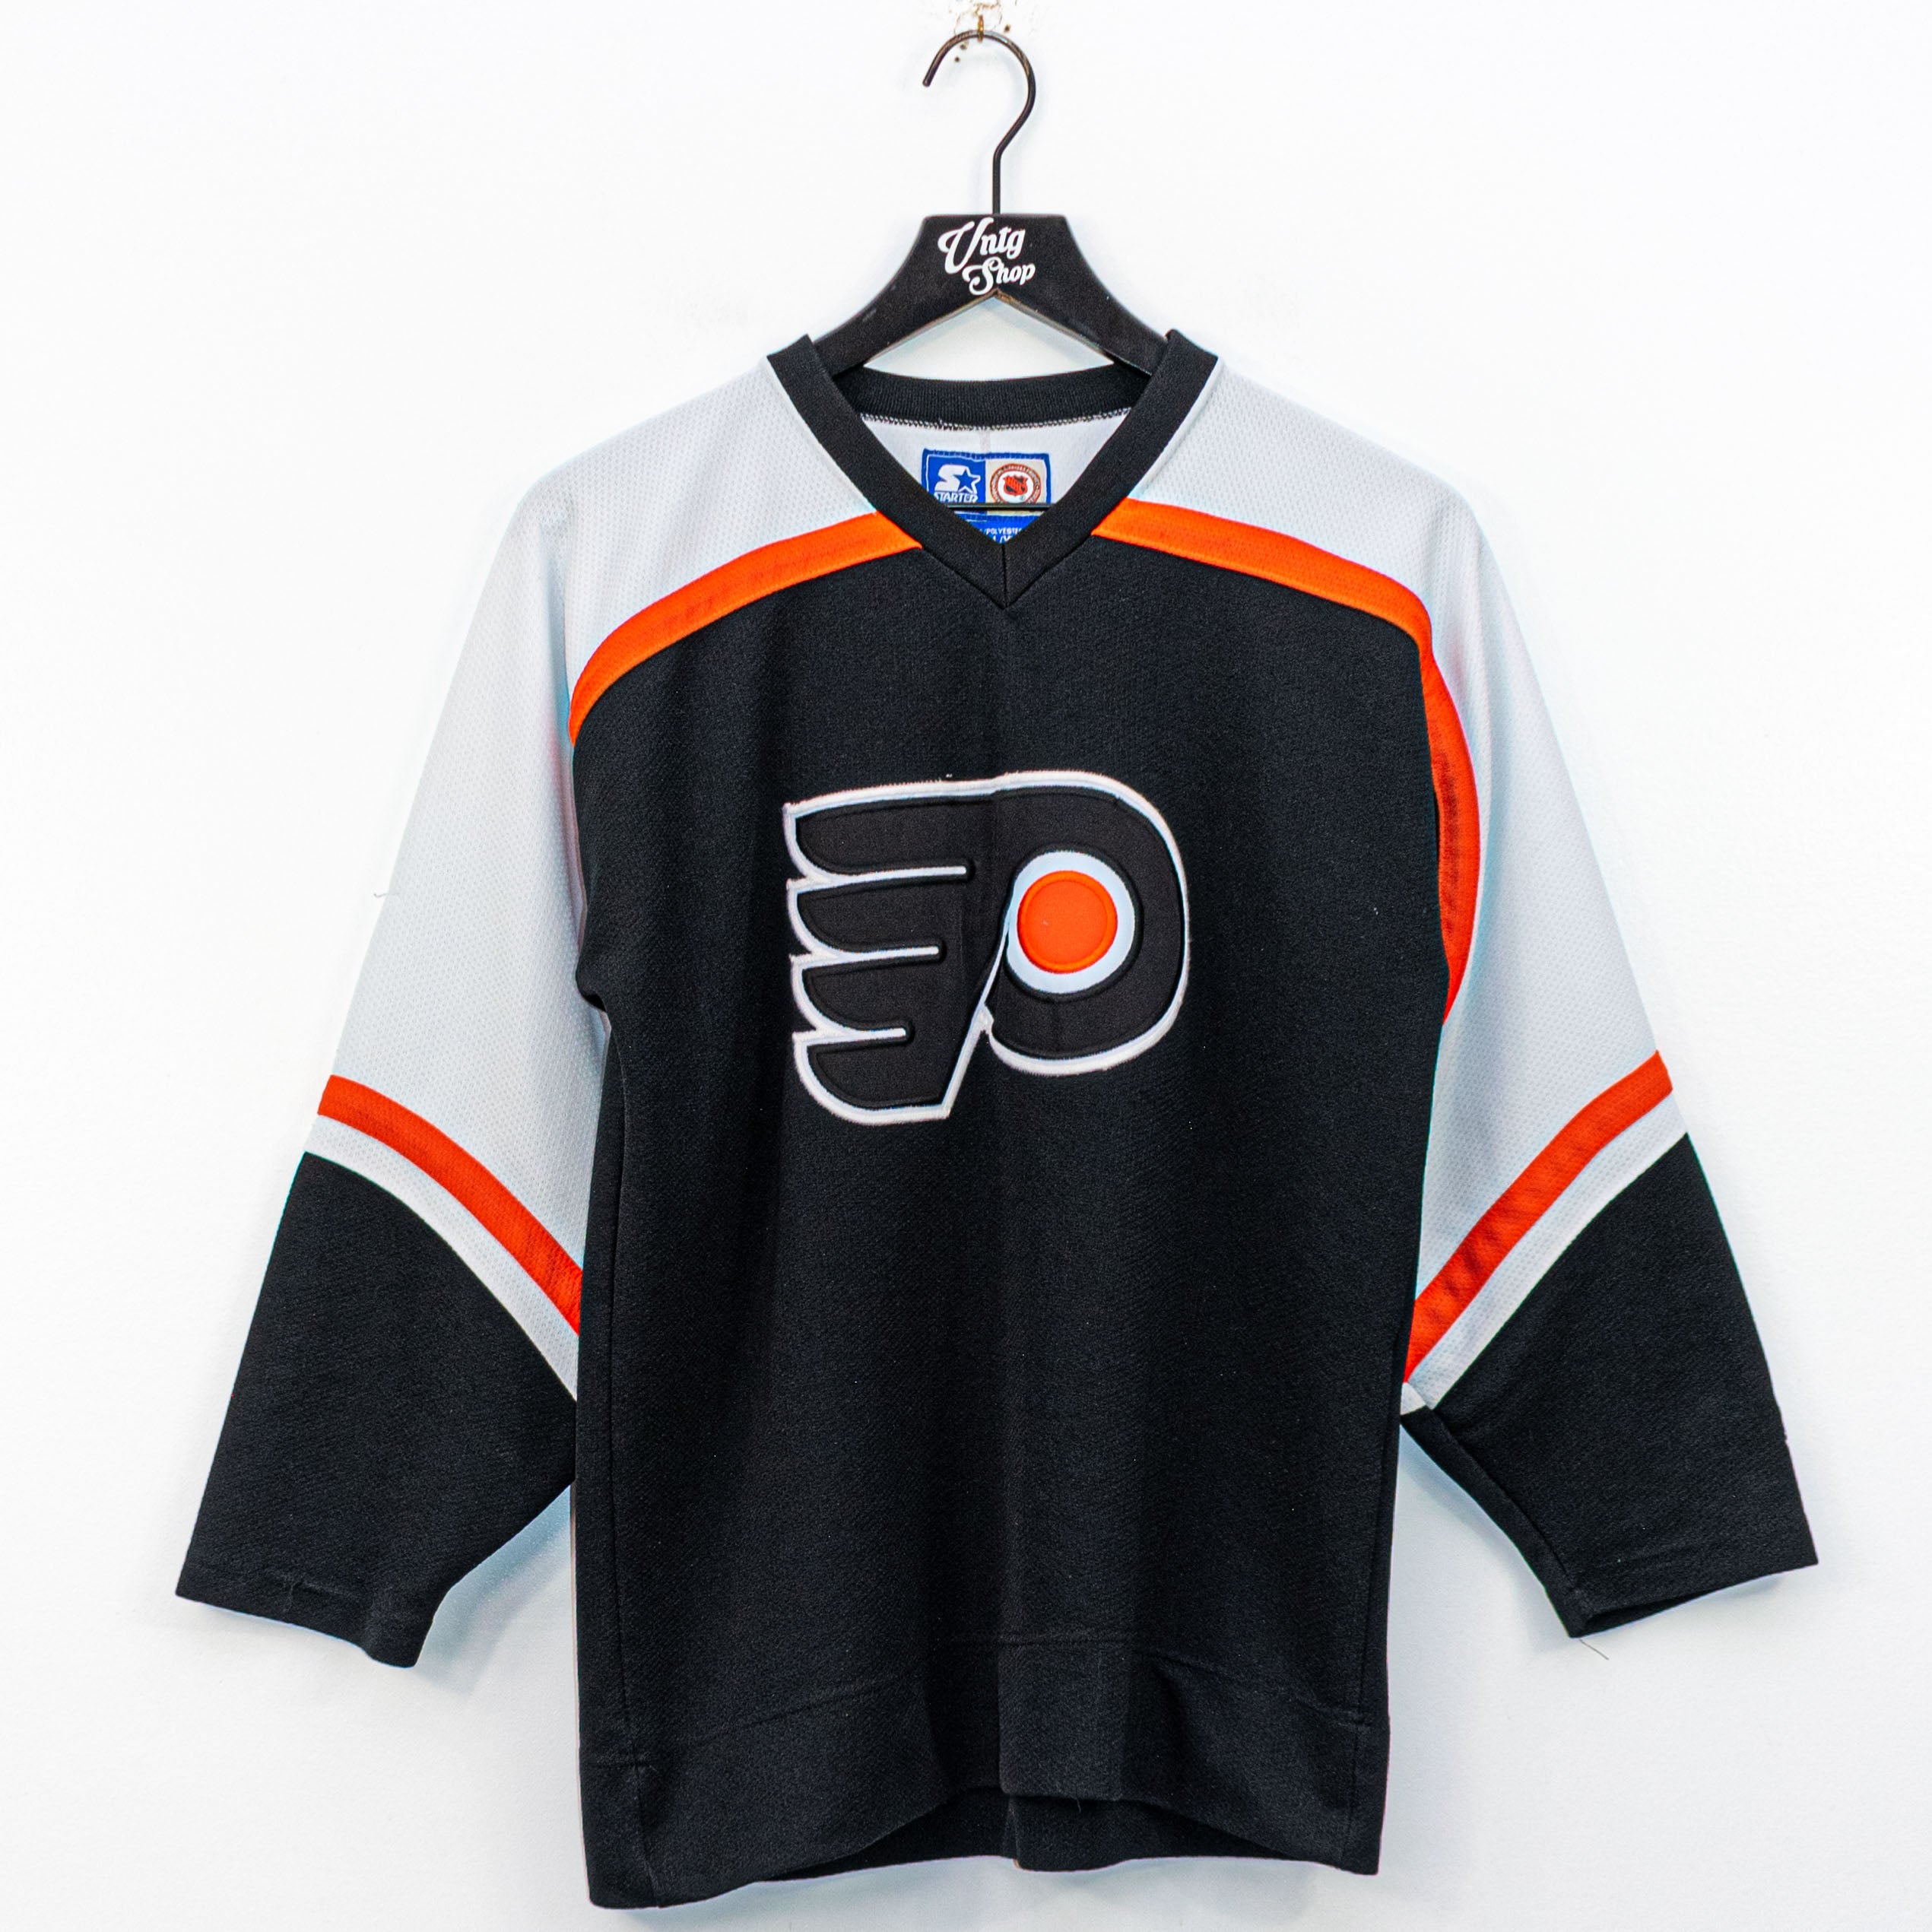 Philadelphia Flyers Apparel  Jerseys, Shirts, Hoodies, Jackets